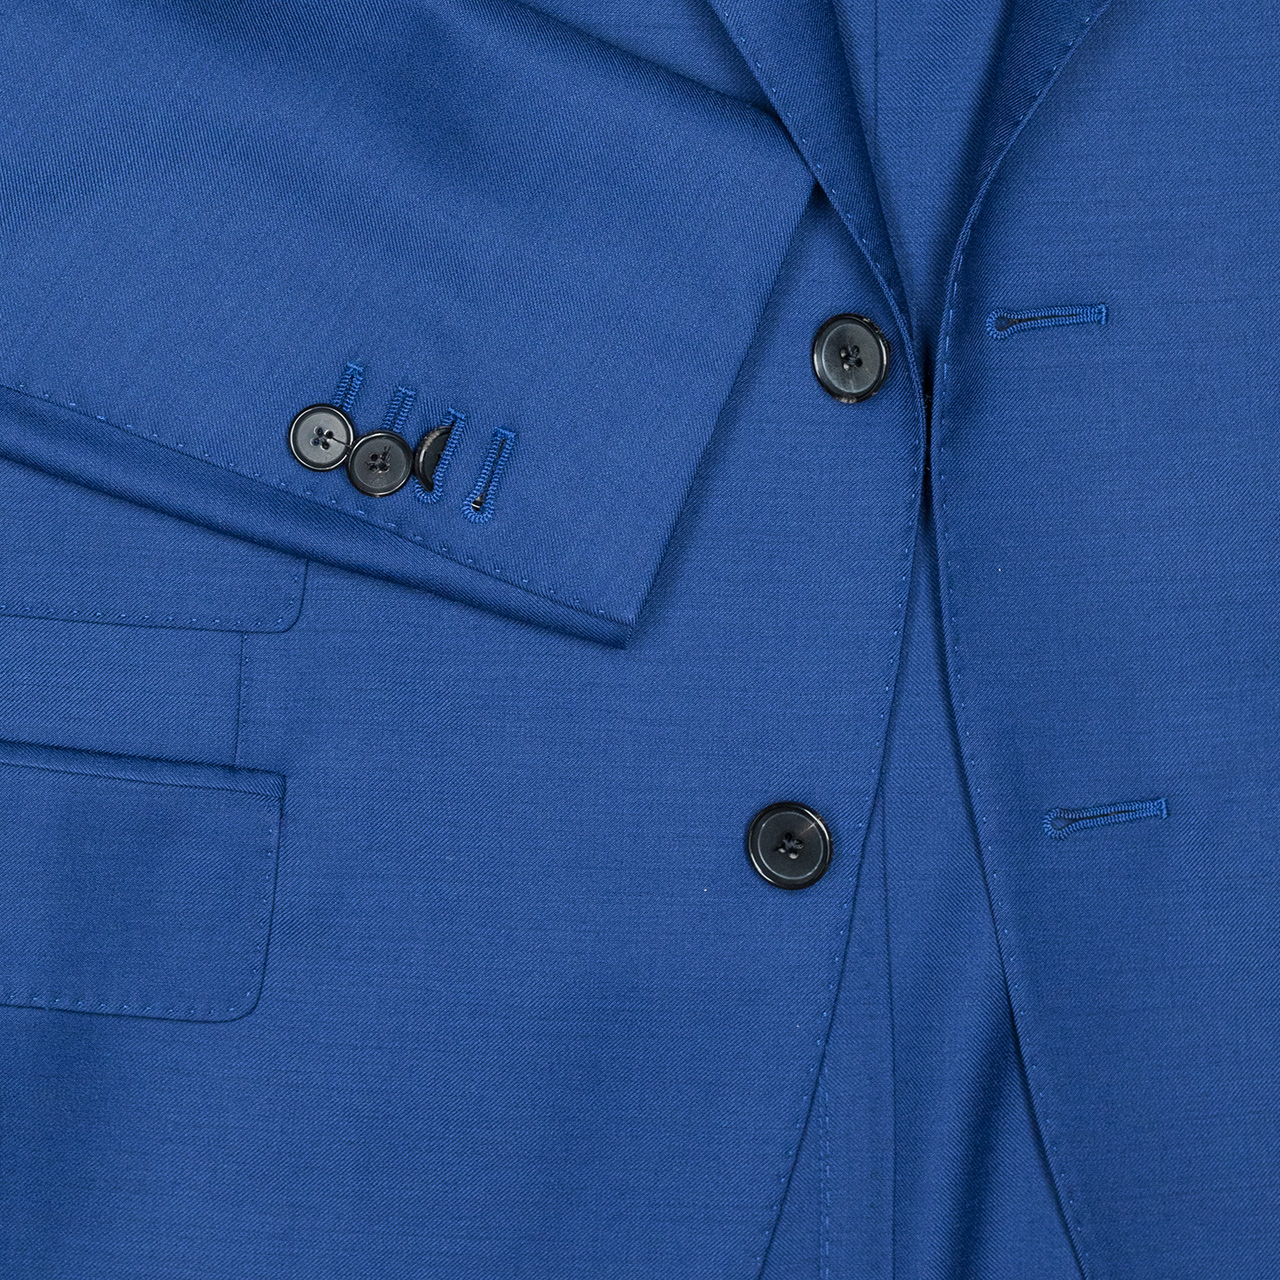 Caruso Anzug in napoliblau aus "Connaisseur Superfine 130'S" Wolle